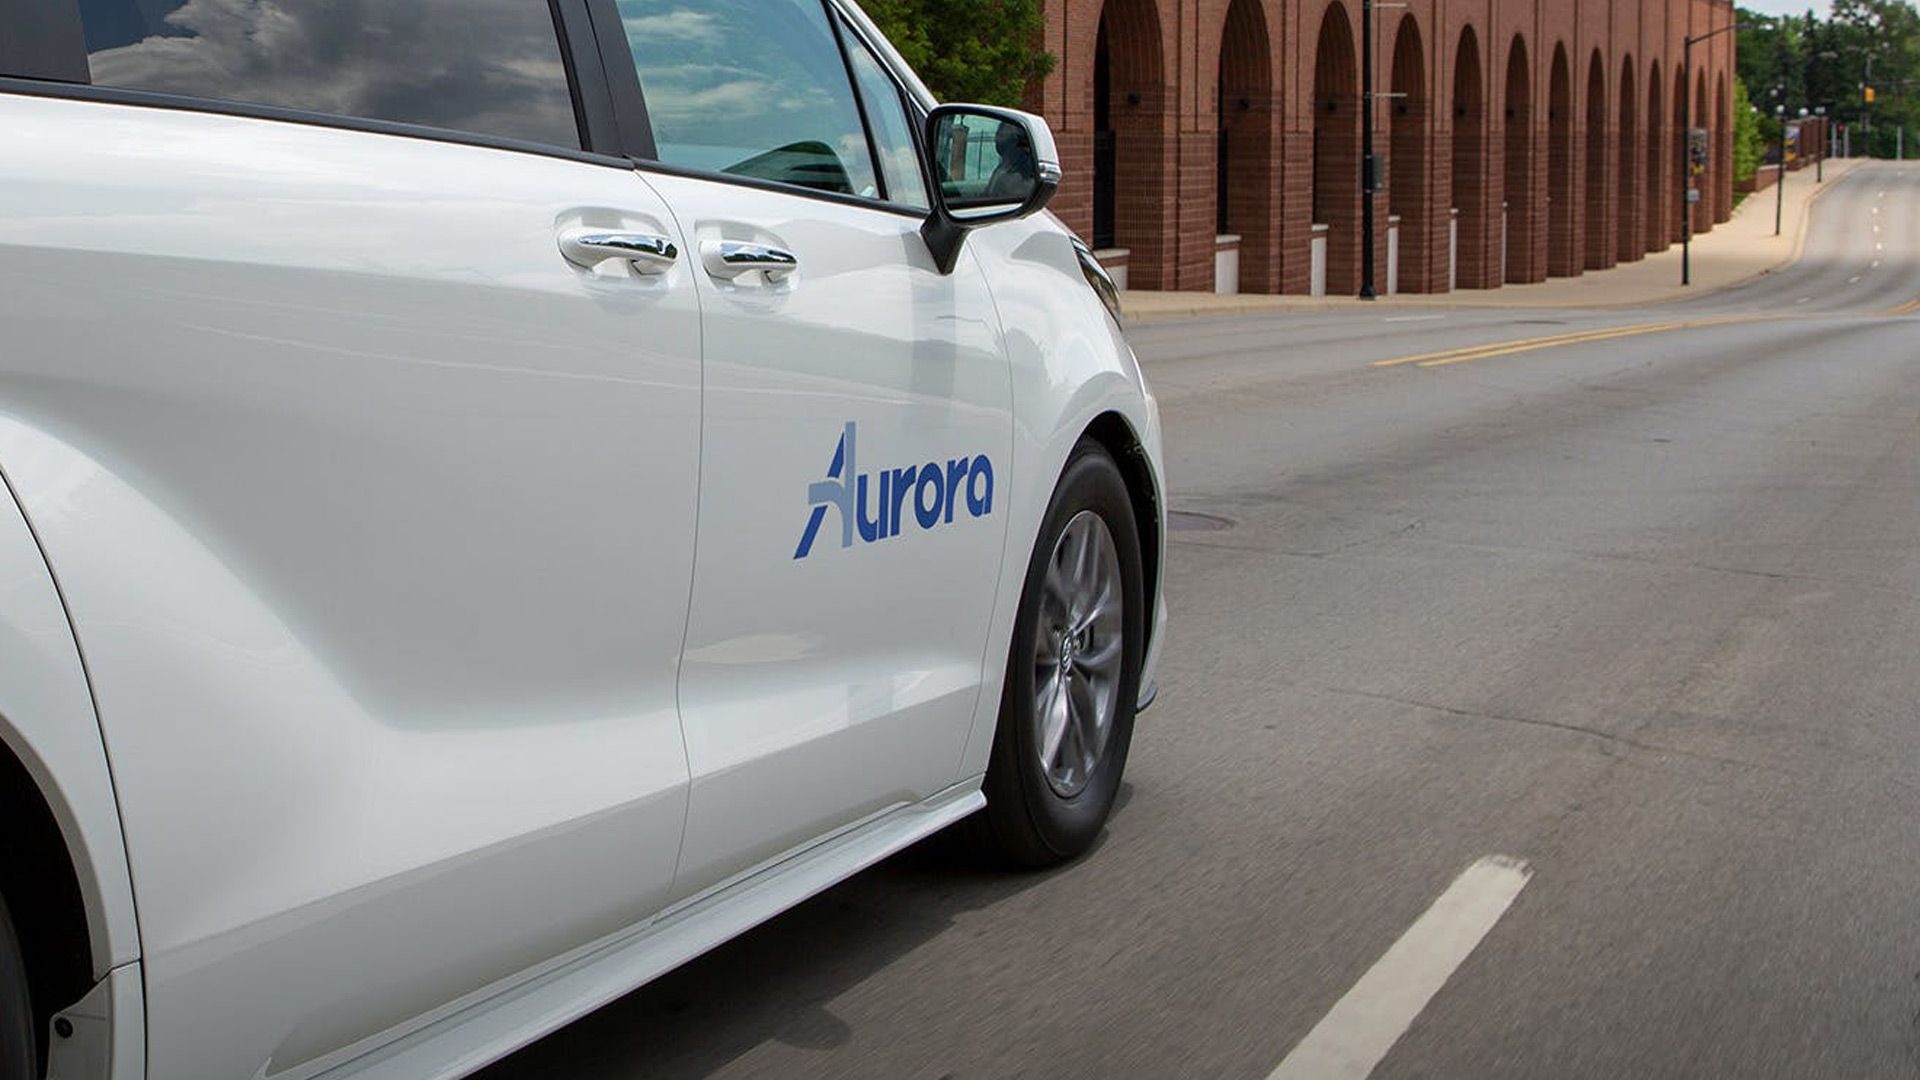 Aurora self-driving car prototype